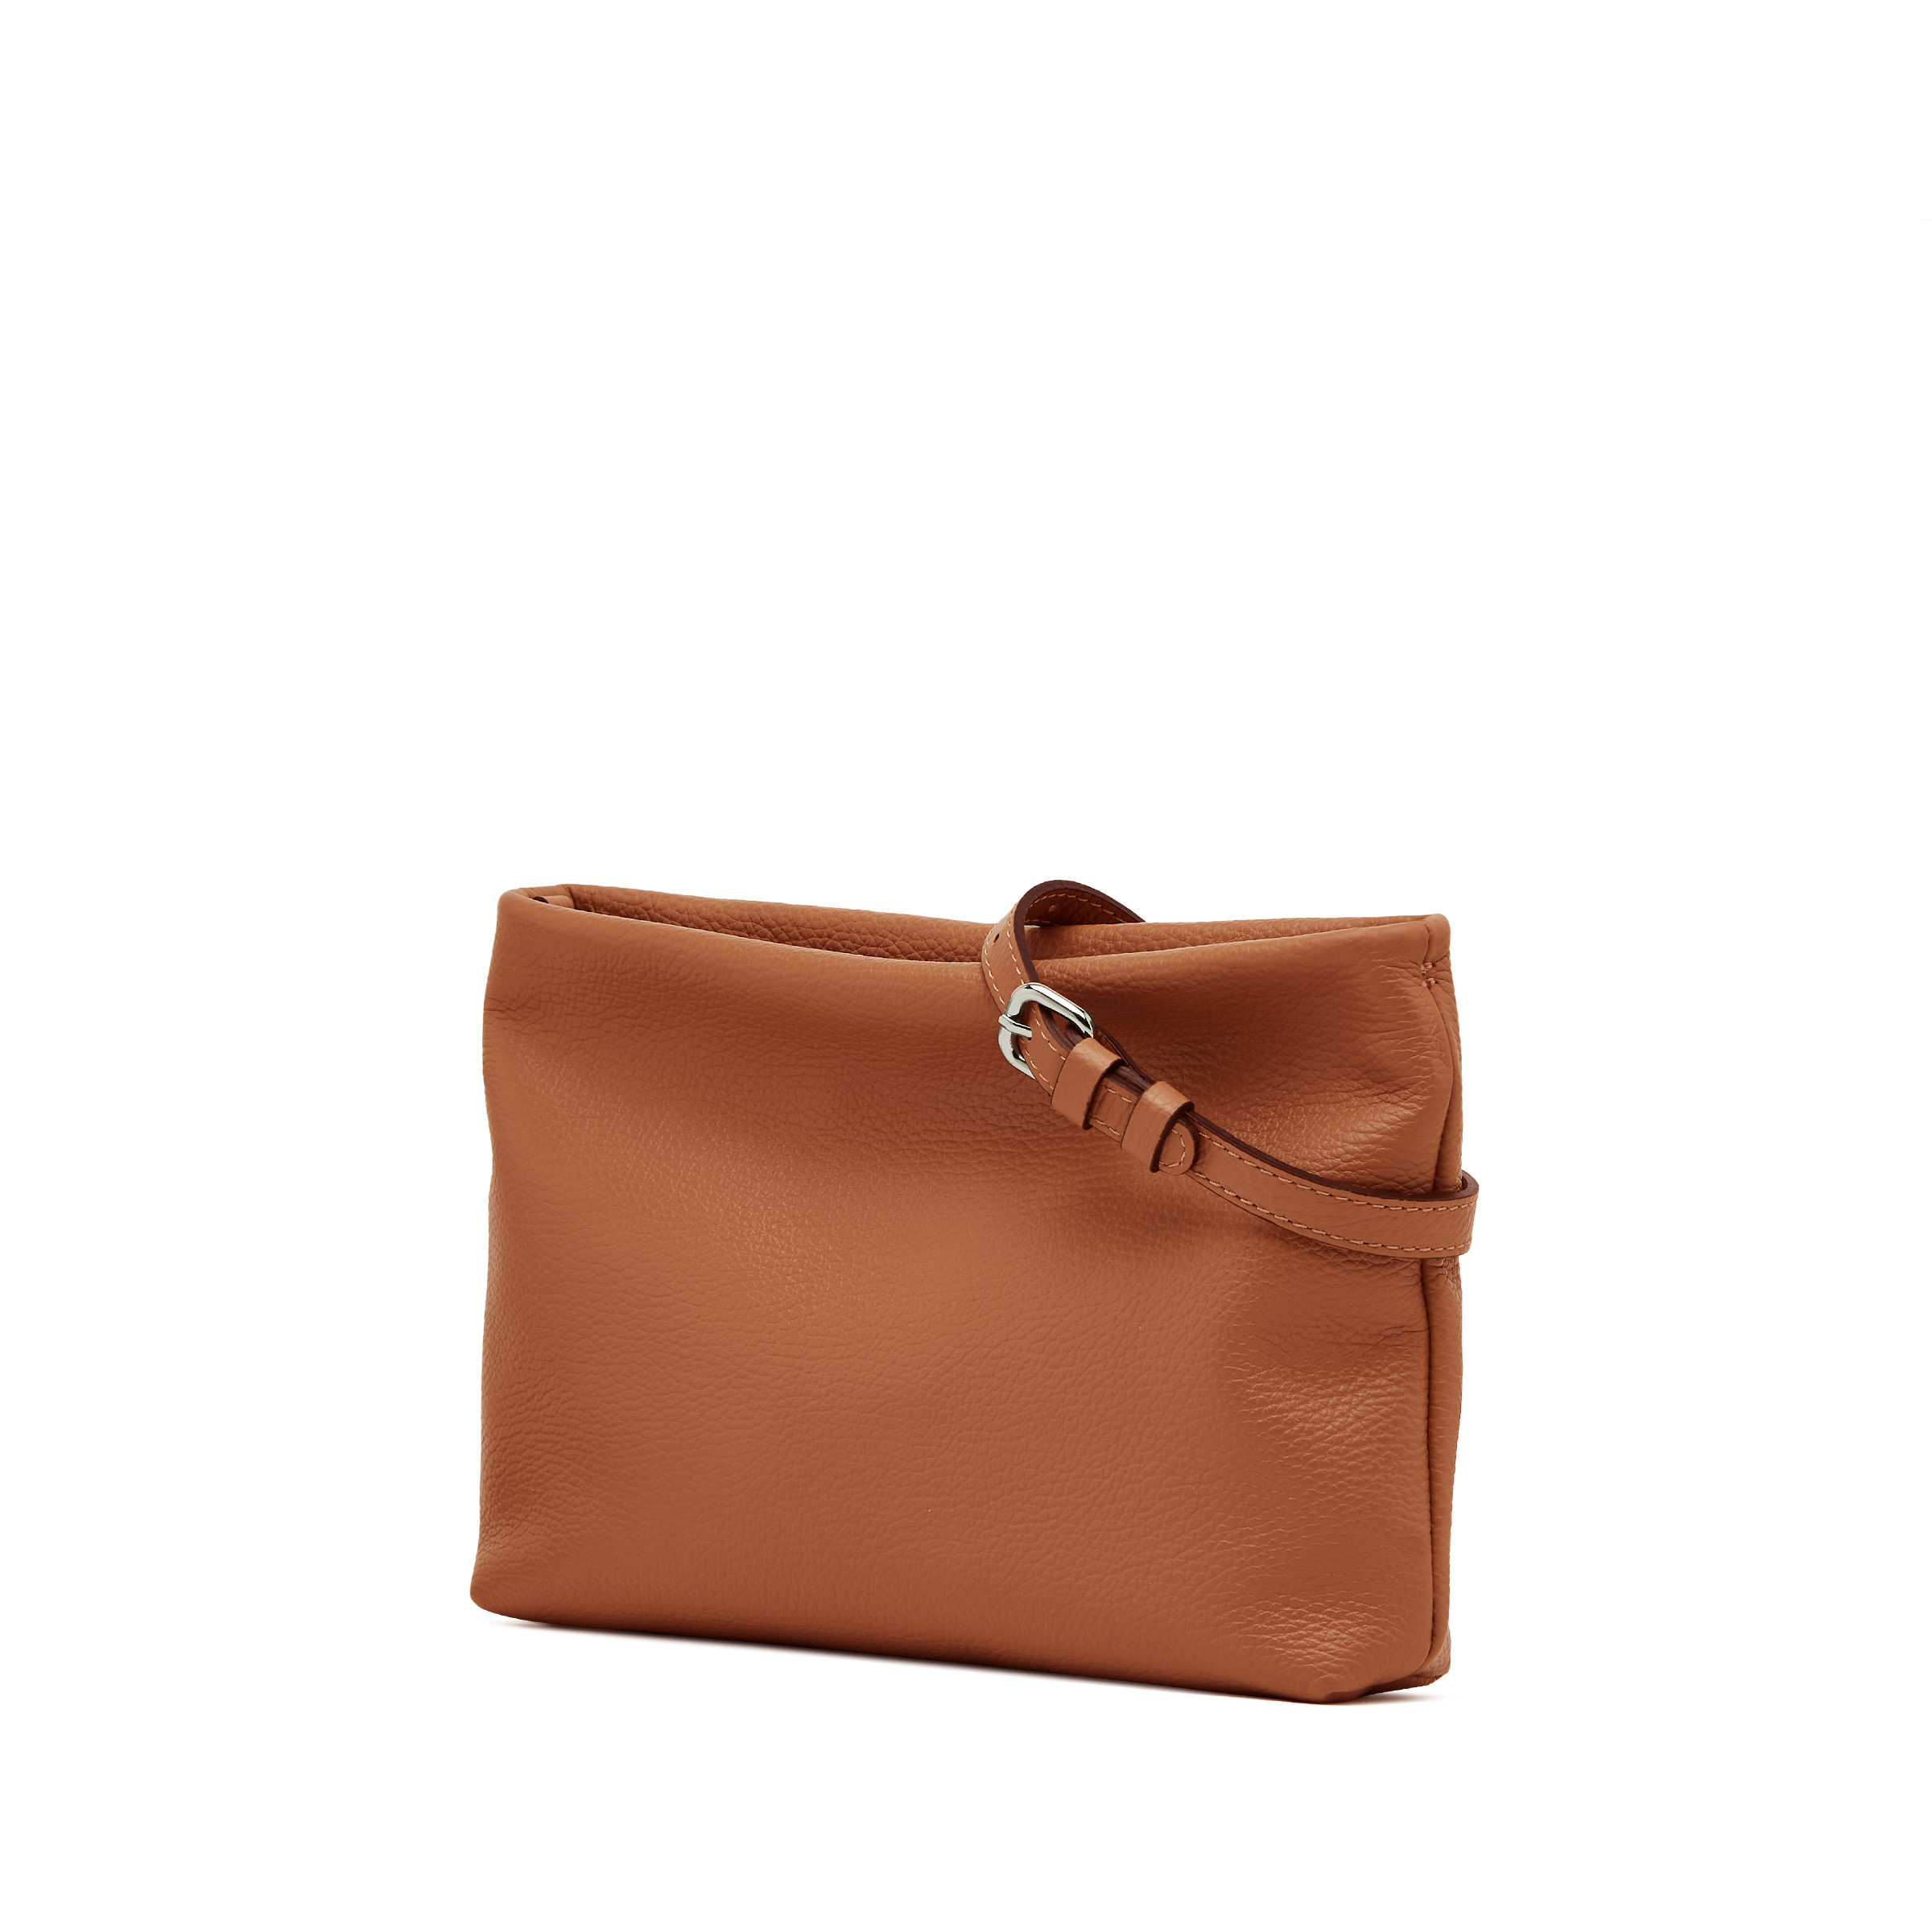 Gianni Chiarini - Brenda leather bag, Brown, large image number 3